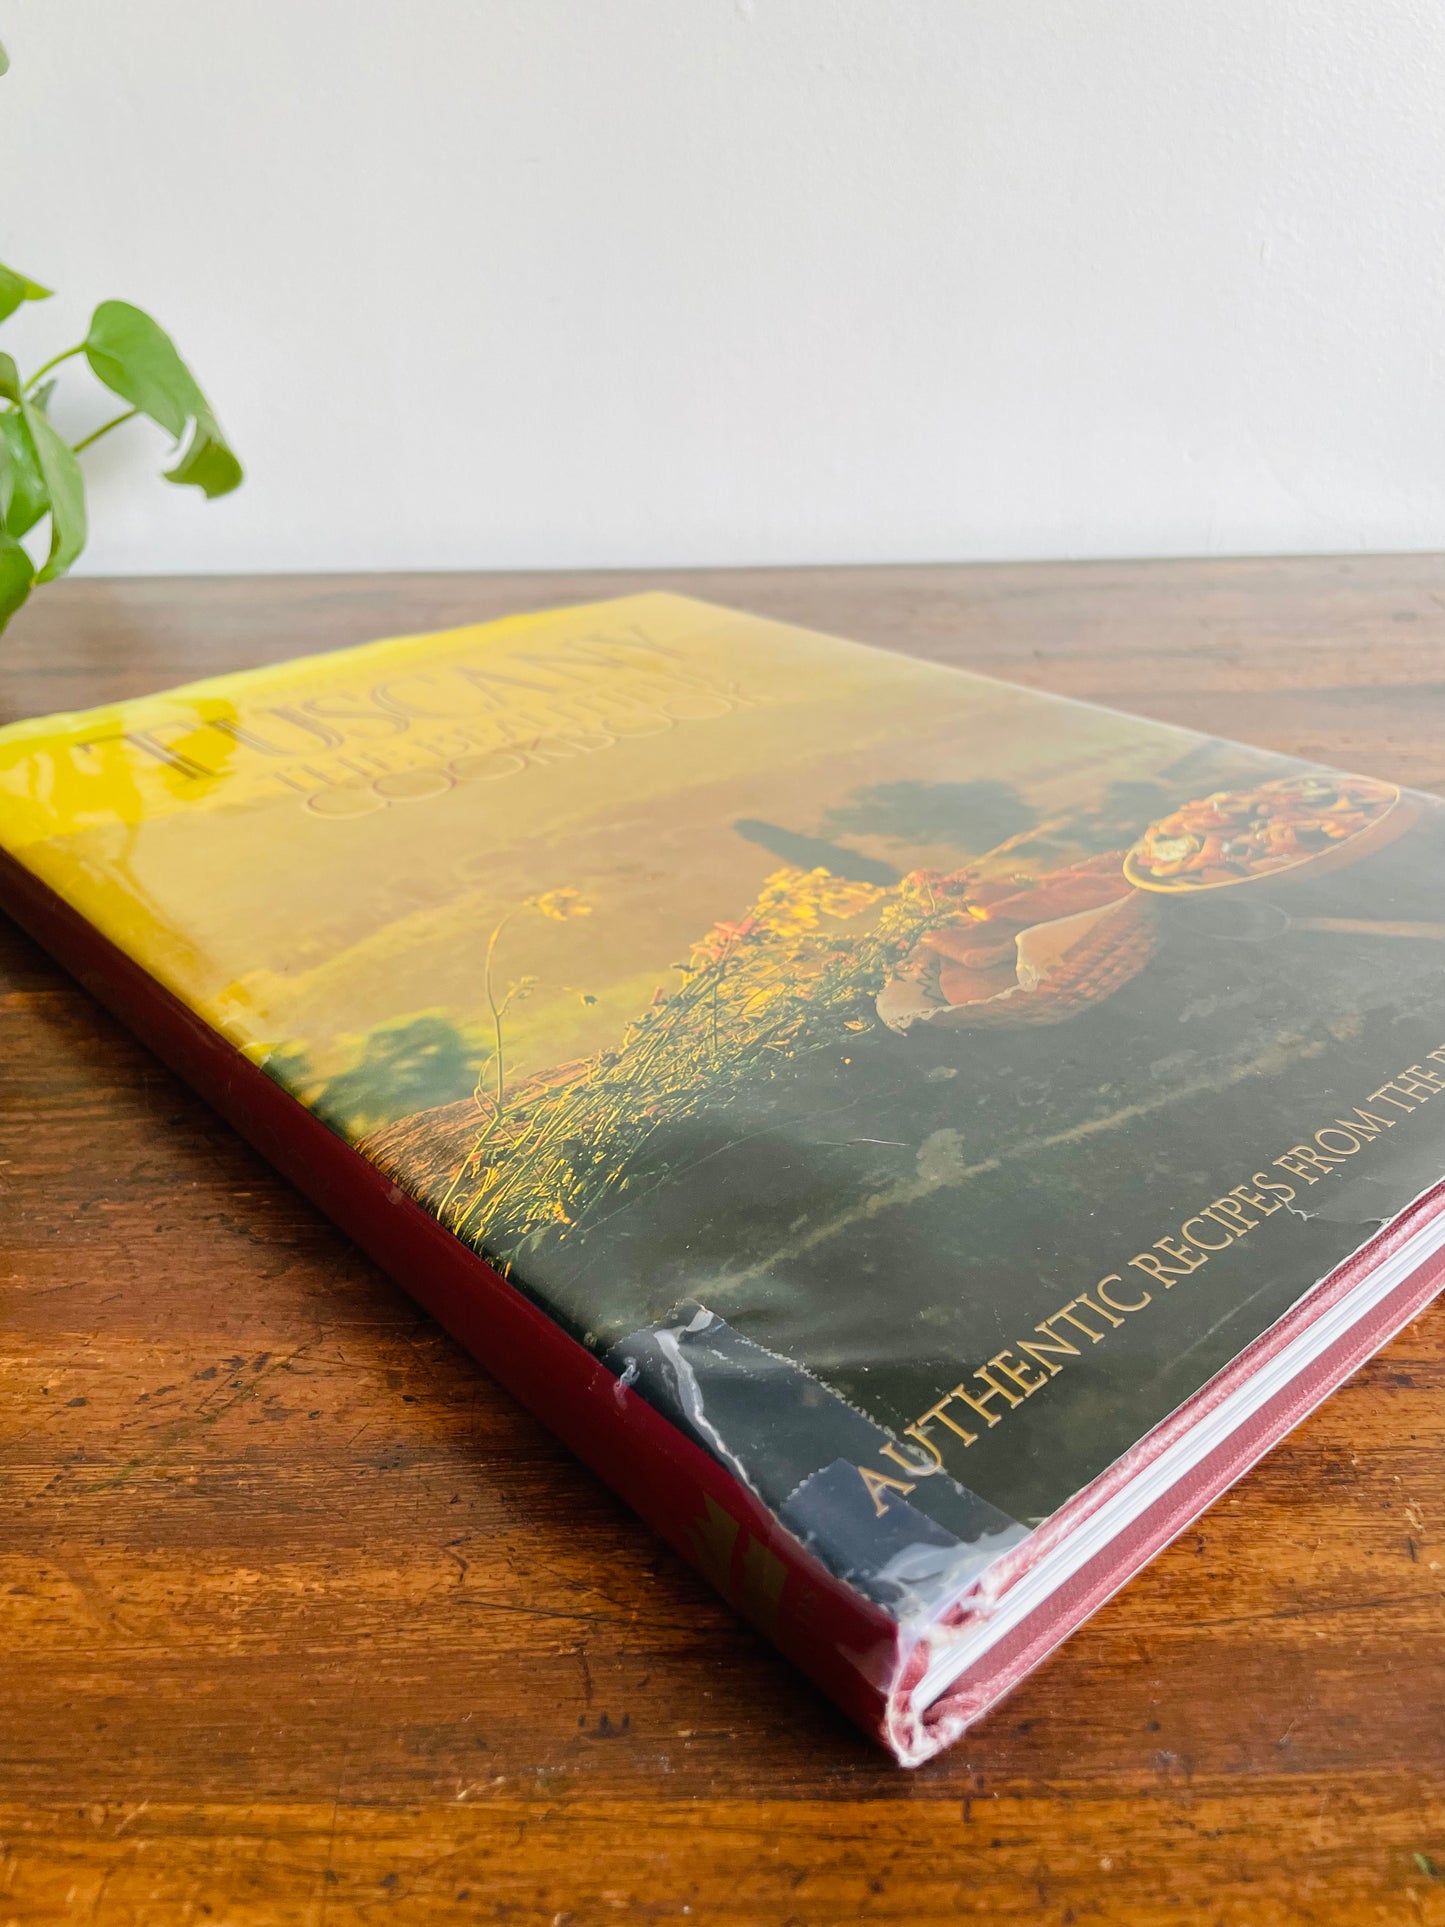 Lorenza De'Medici's Tuscany: The Beautiful Cookbook - Giant Hardcover Book with Photos (1996)